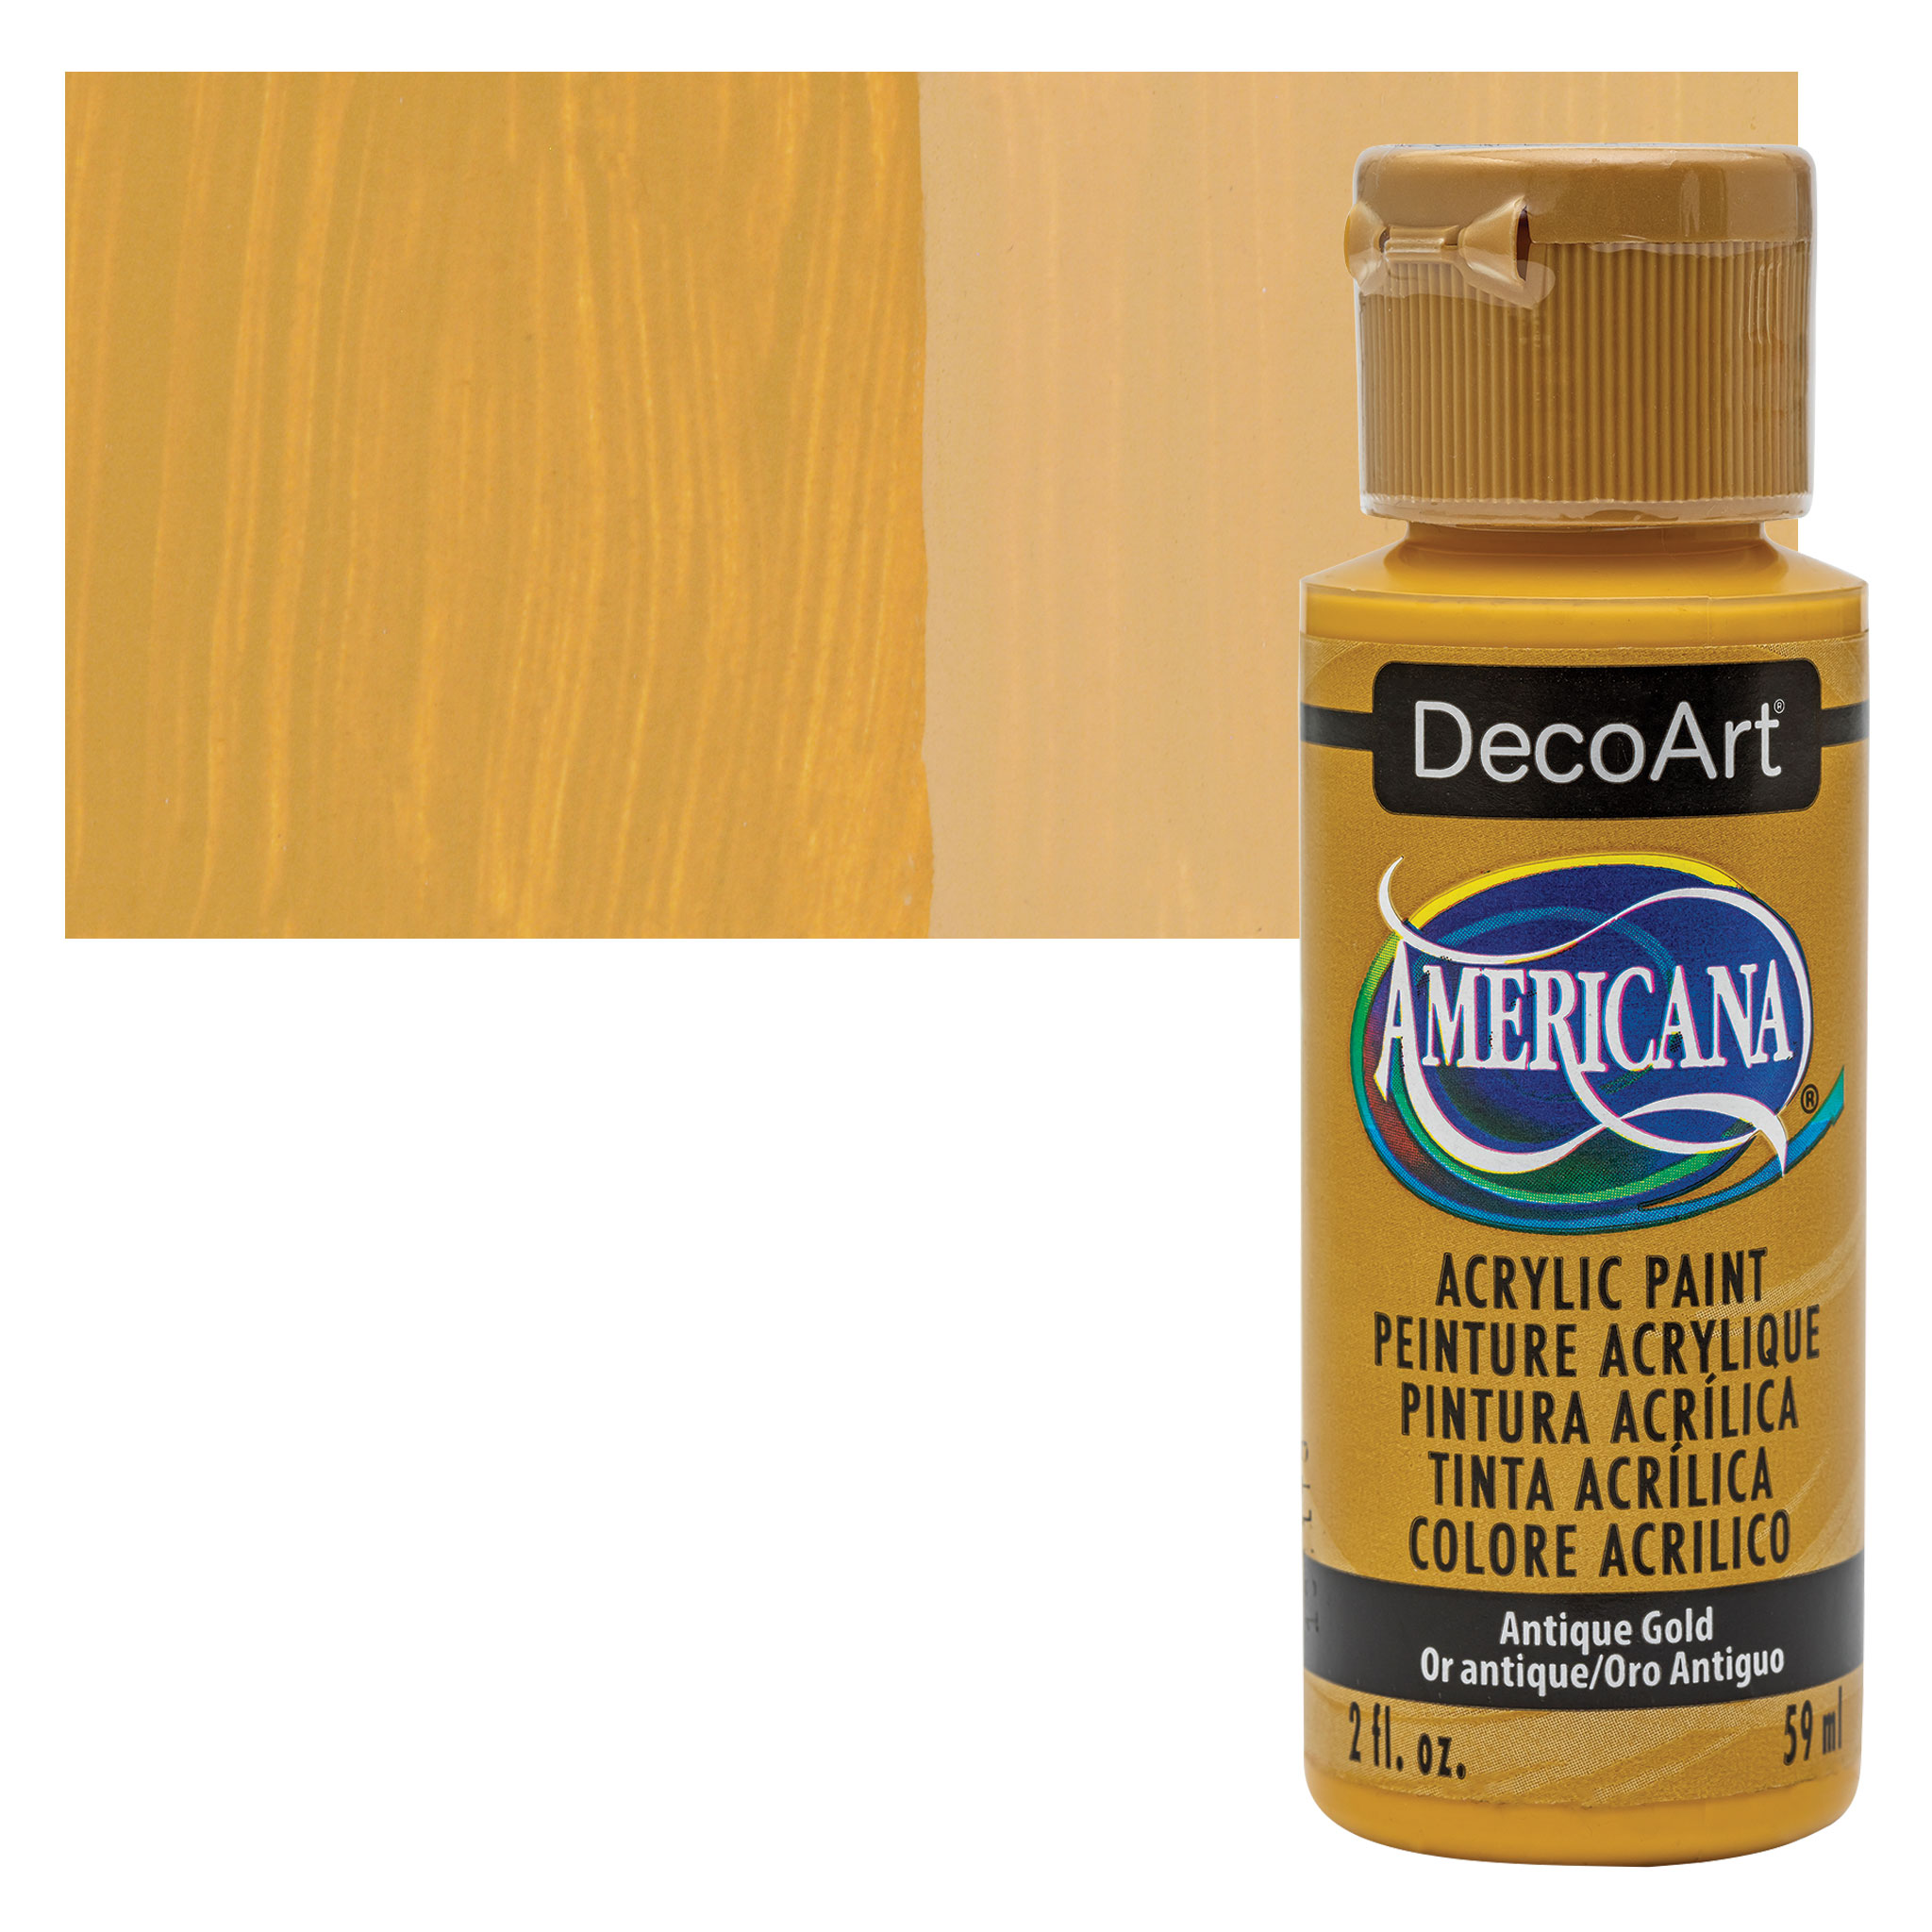 DecoArt Americana Acrylic Paint - Antique Gold, 2 oz